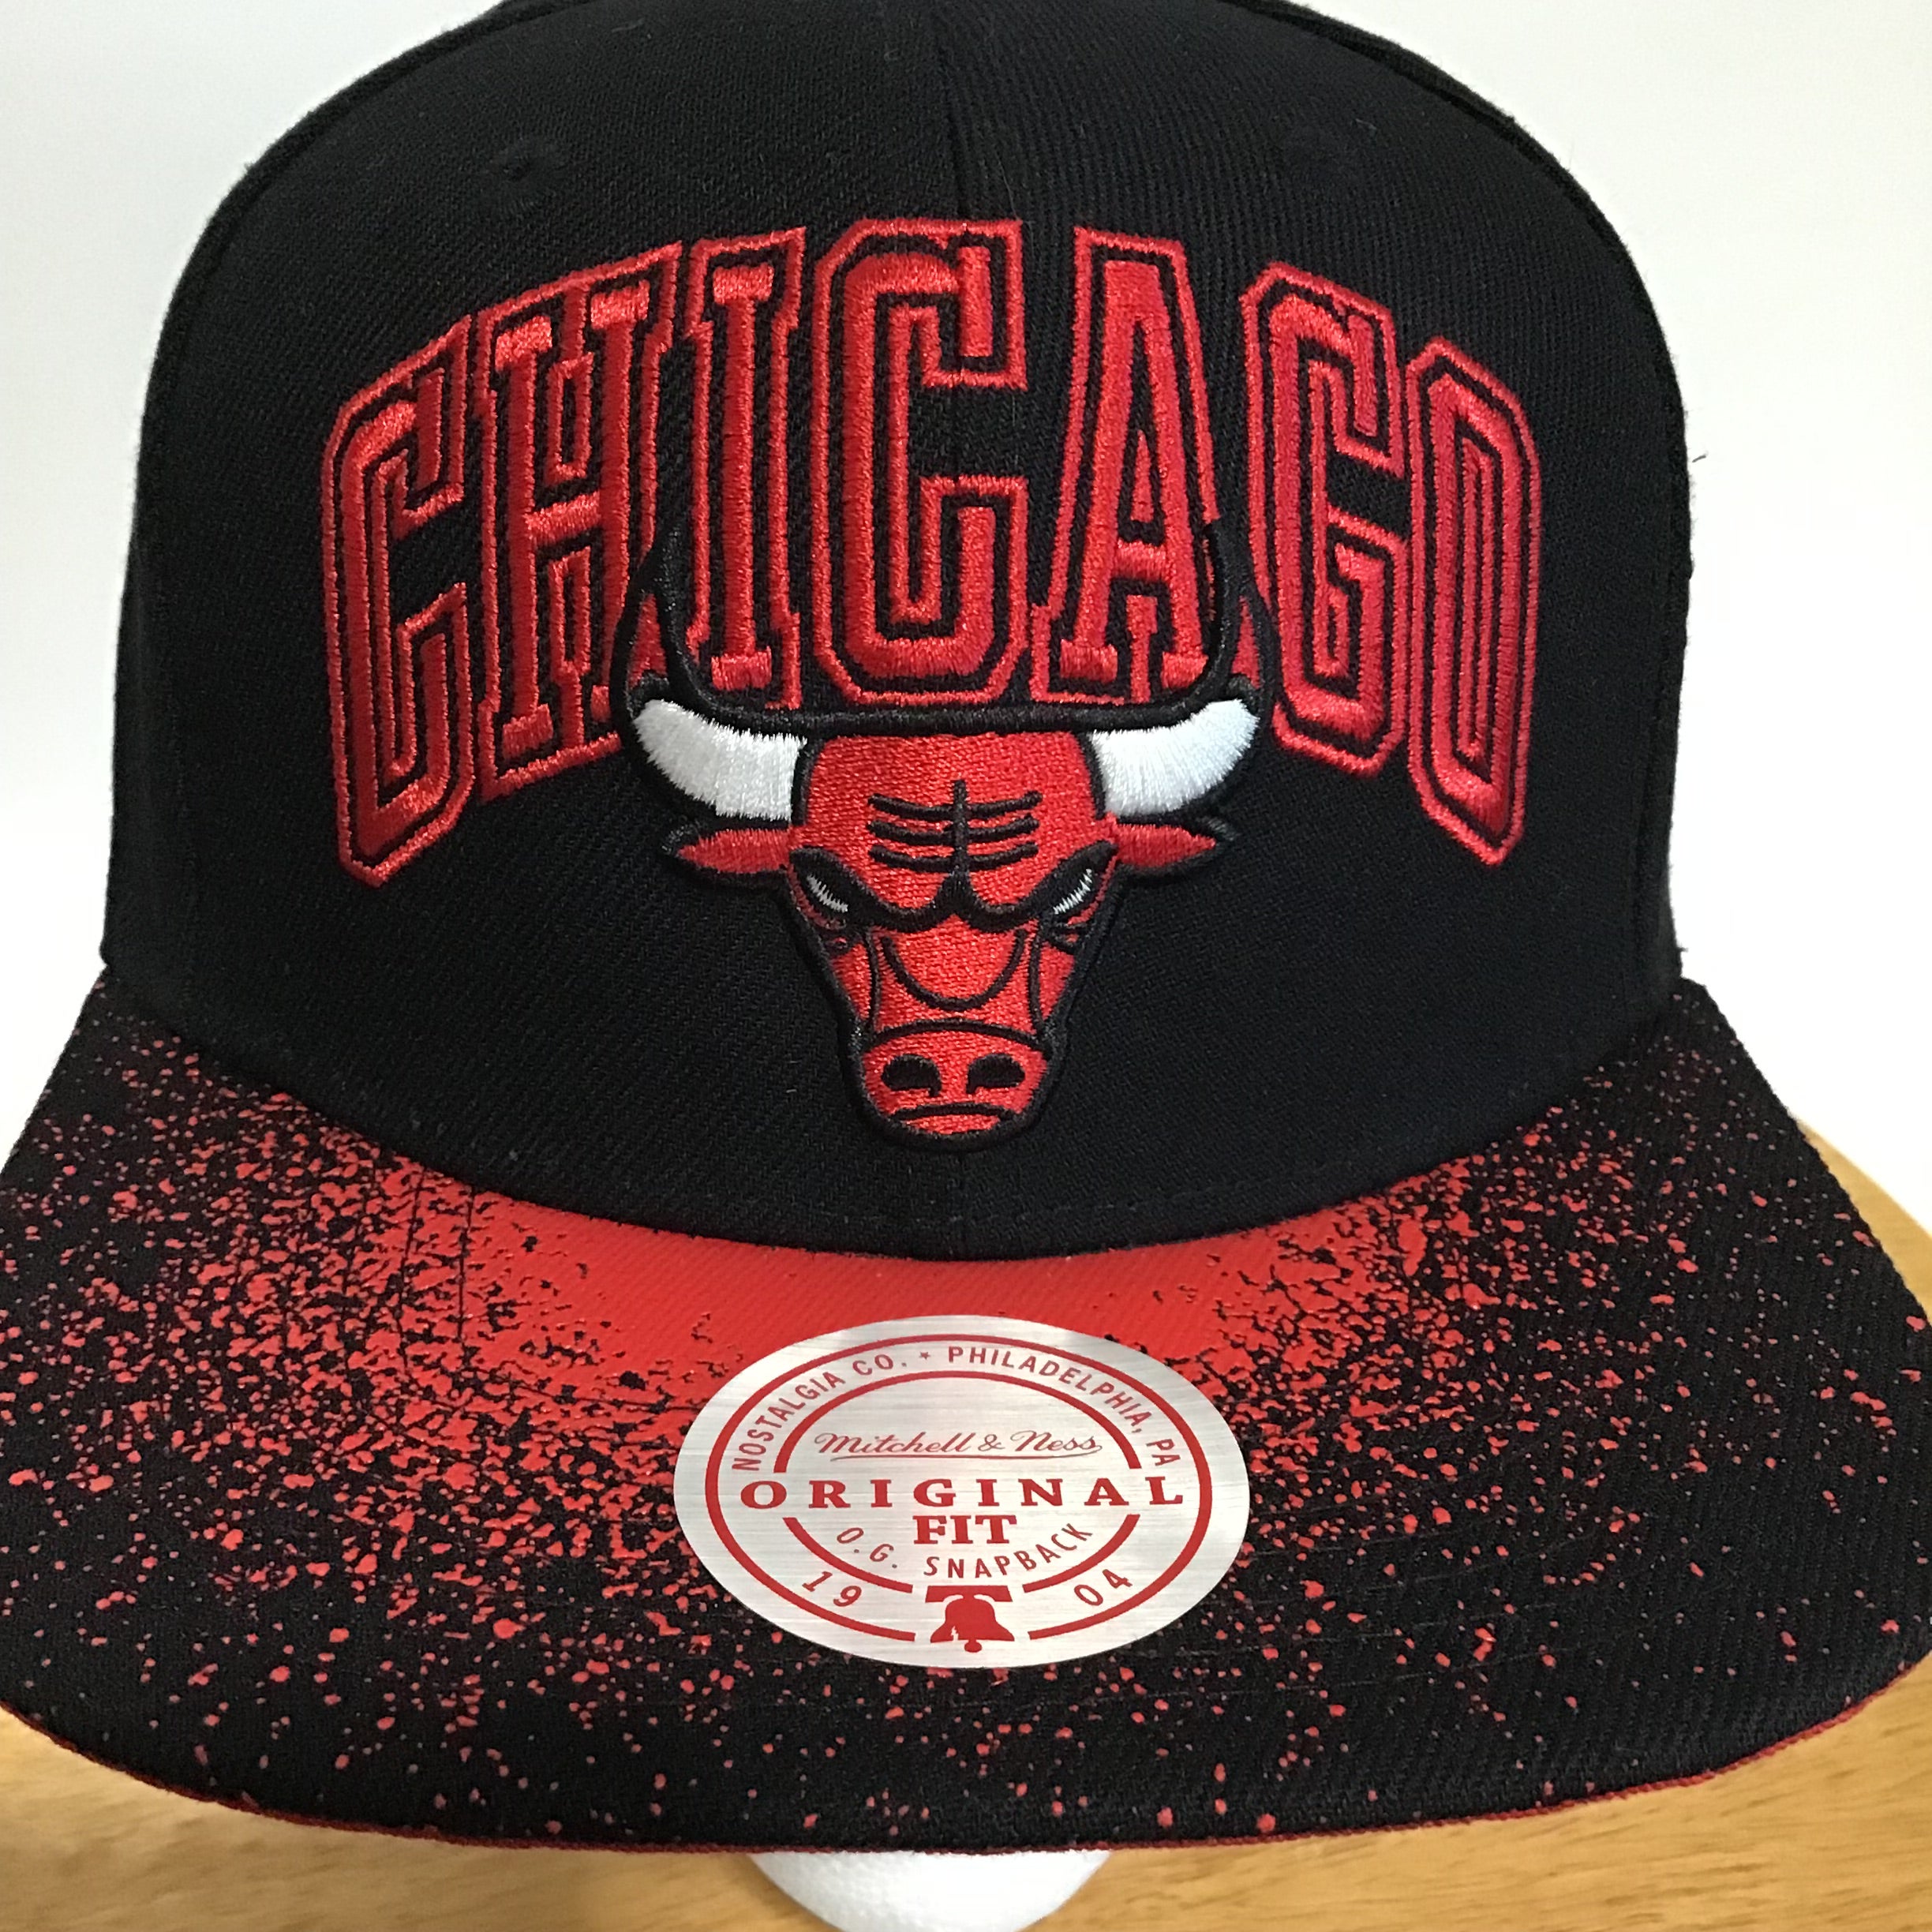 Mitchell & Ness Chicago Bulls Snapback Hat - Black/Red/Script/Satin -  Basketball Cap for Men